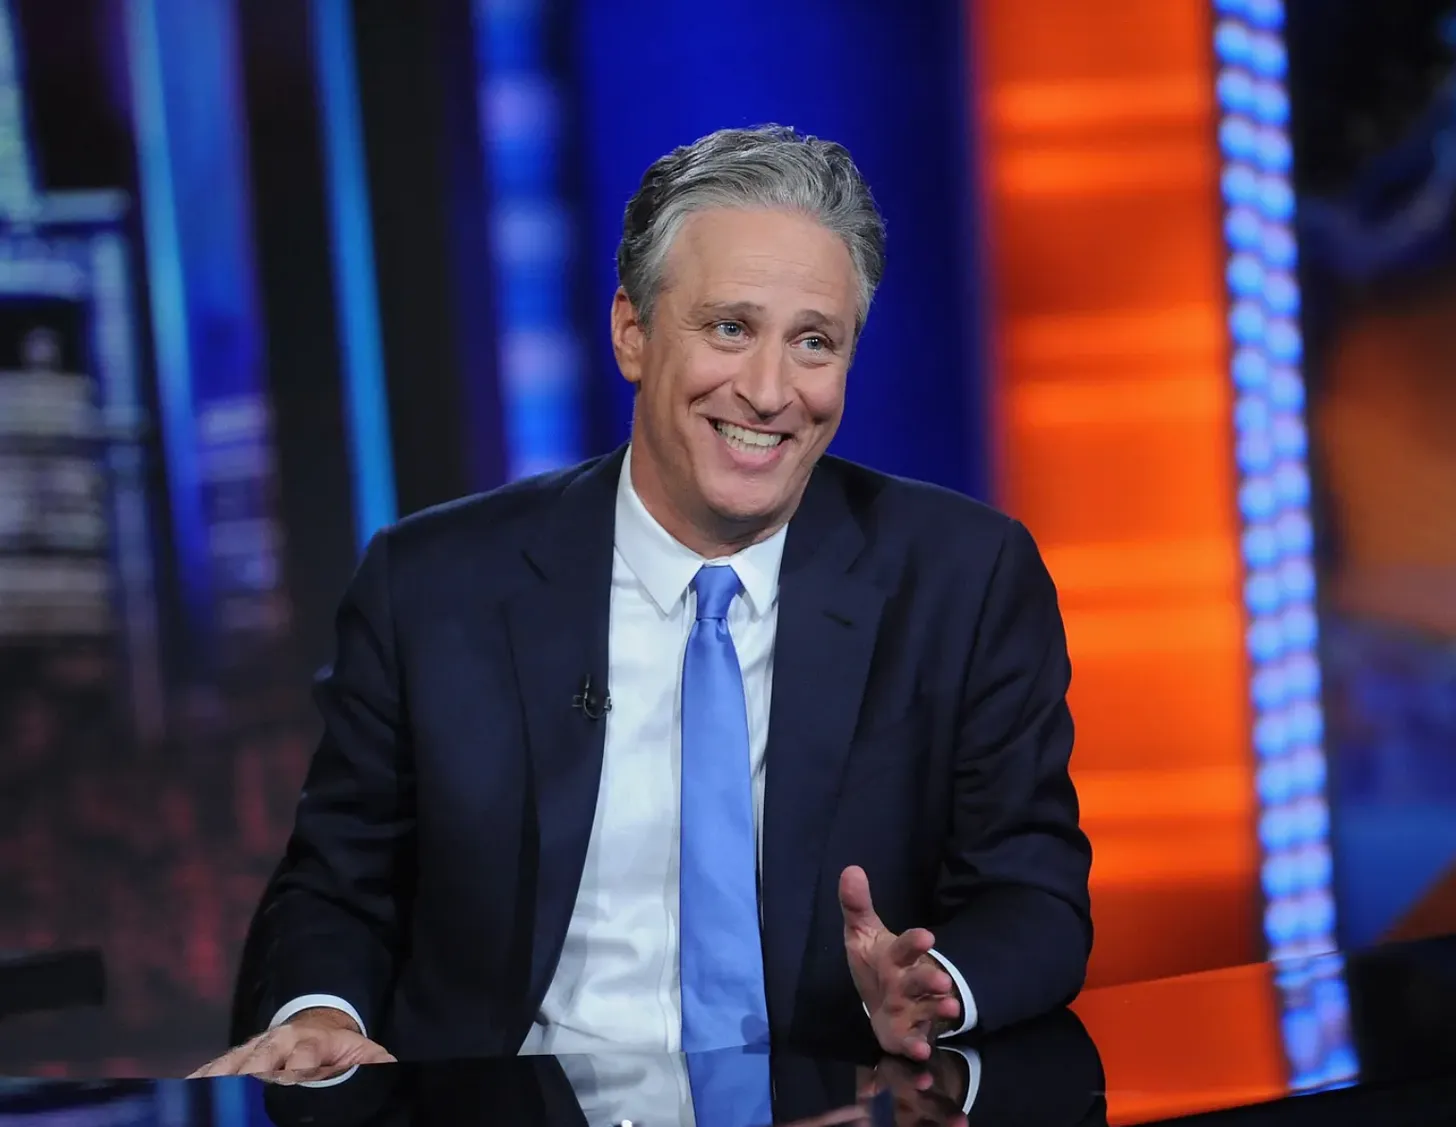 Analysis: Jon Stewart’s return to The Daily Show will – no joke – help Democrats in November (deanobeidallah.substack.com)